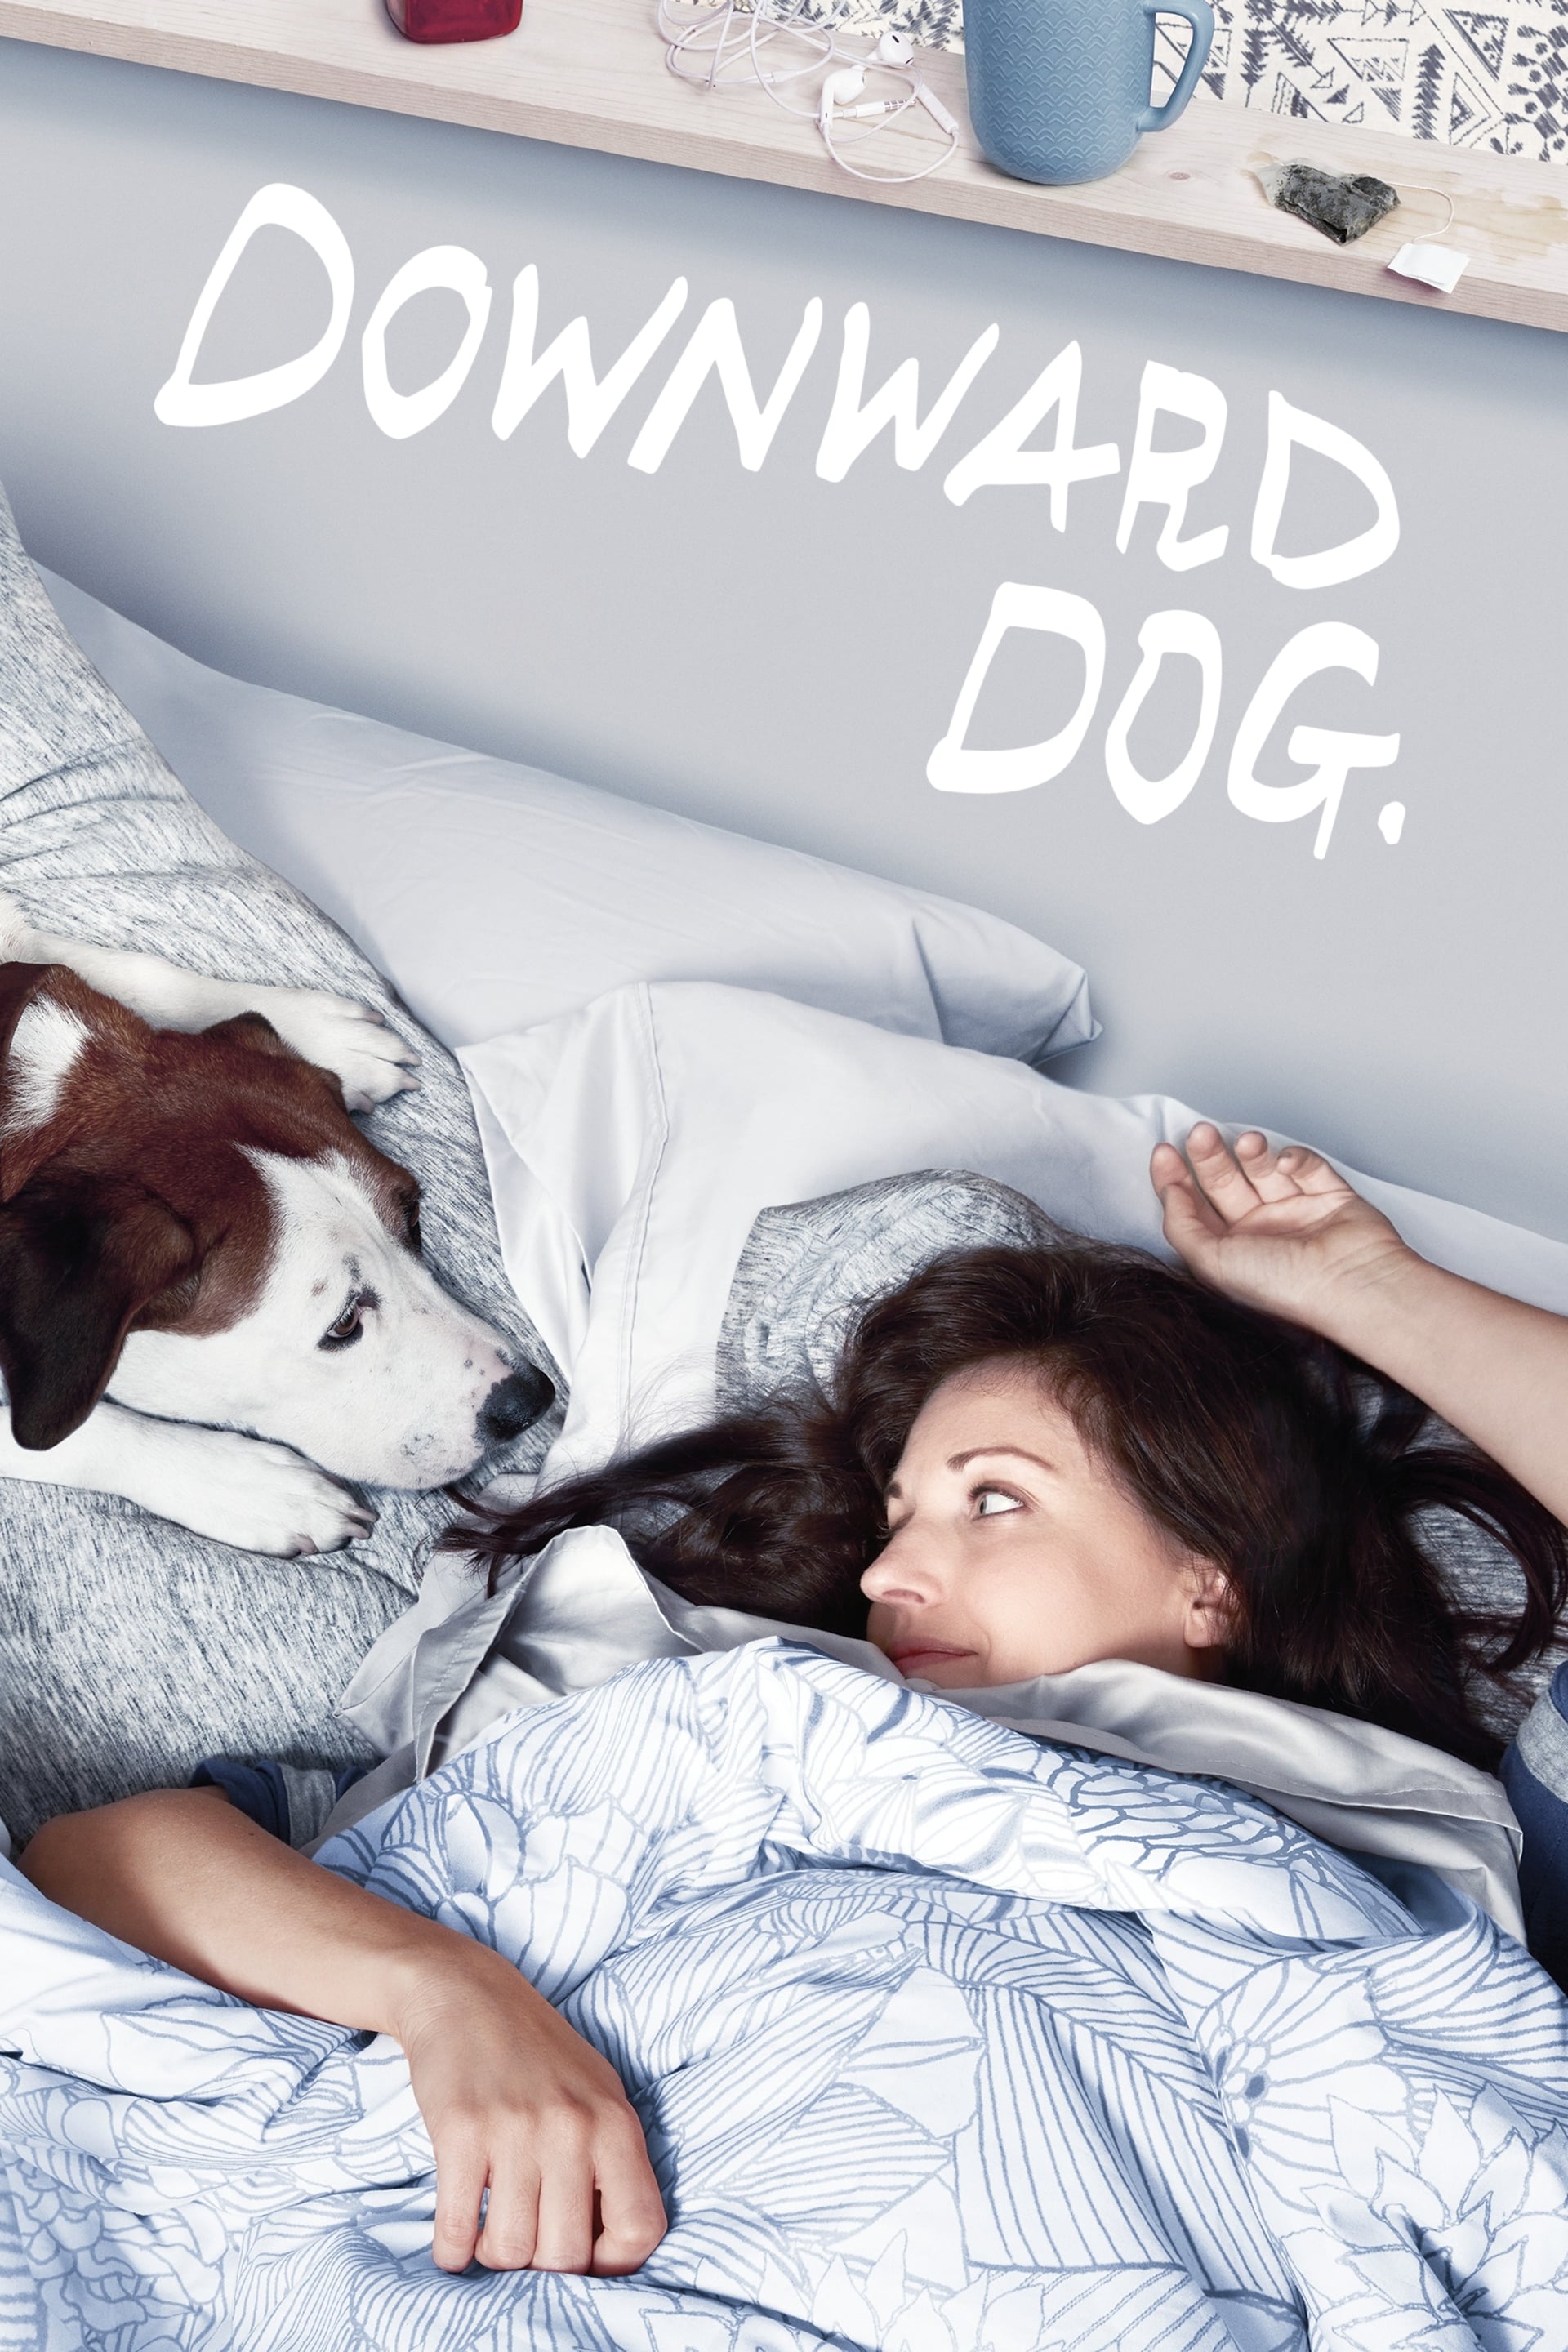 Downward Dog TV Shows About Relationship Problems